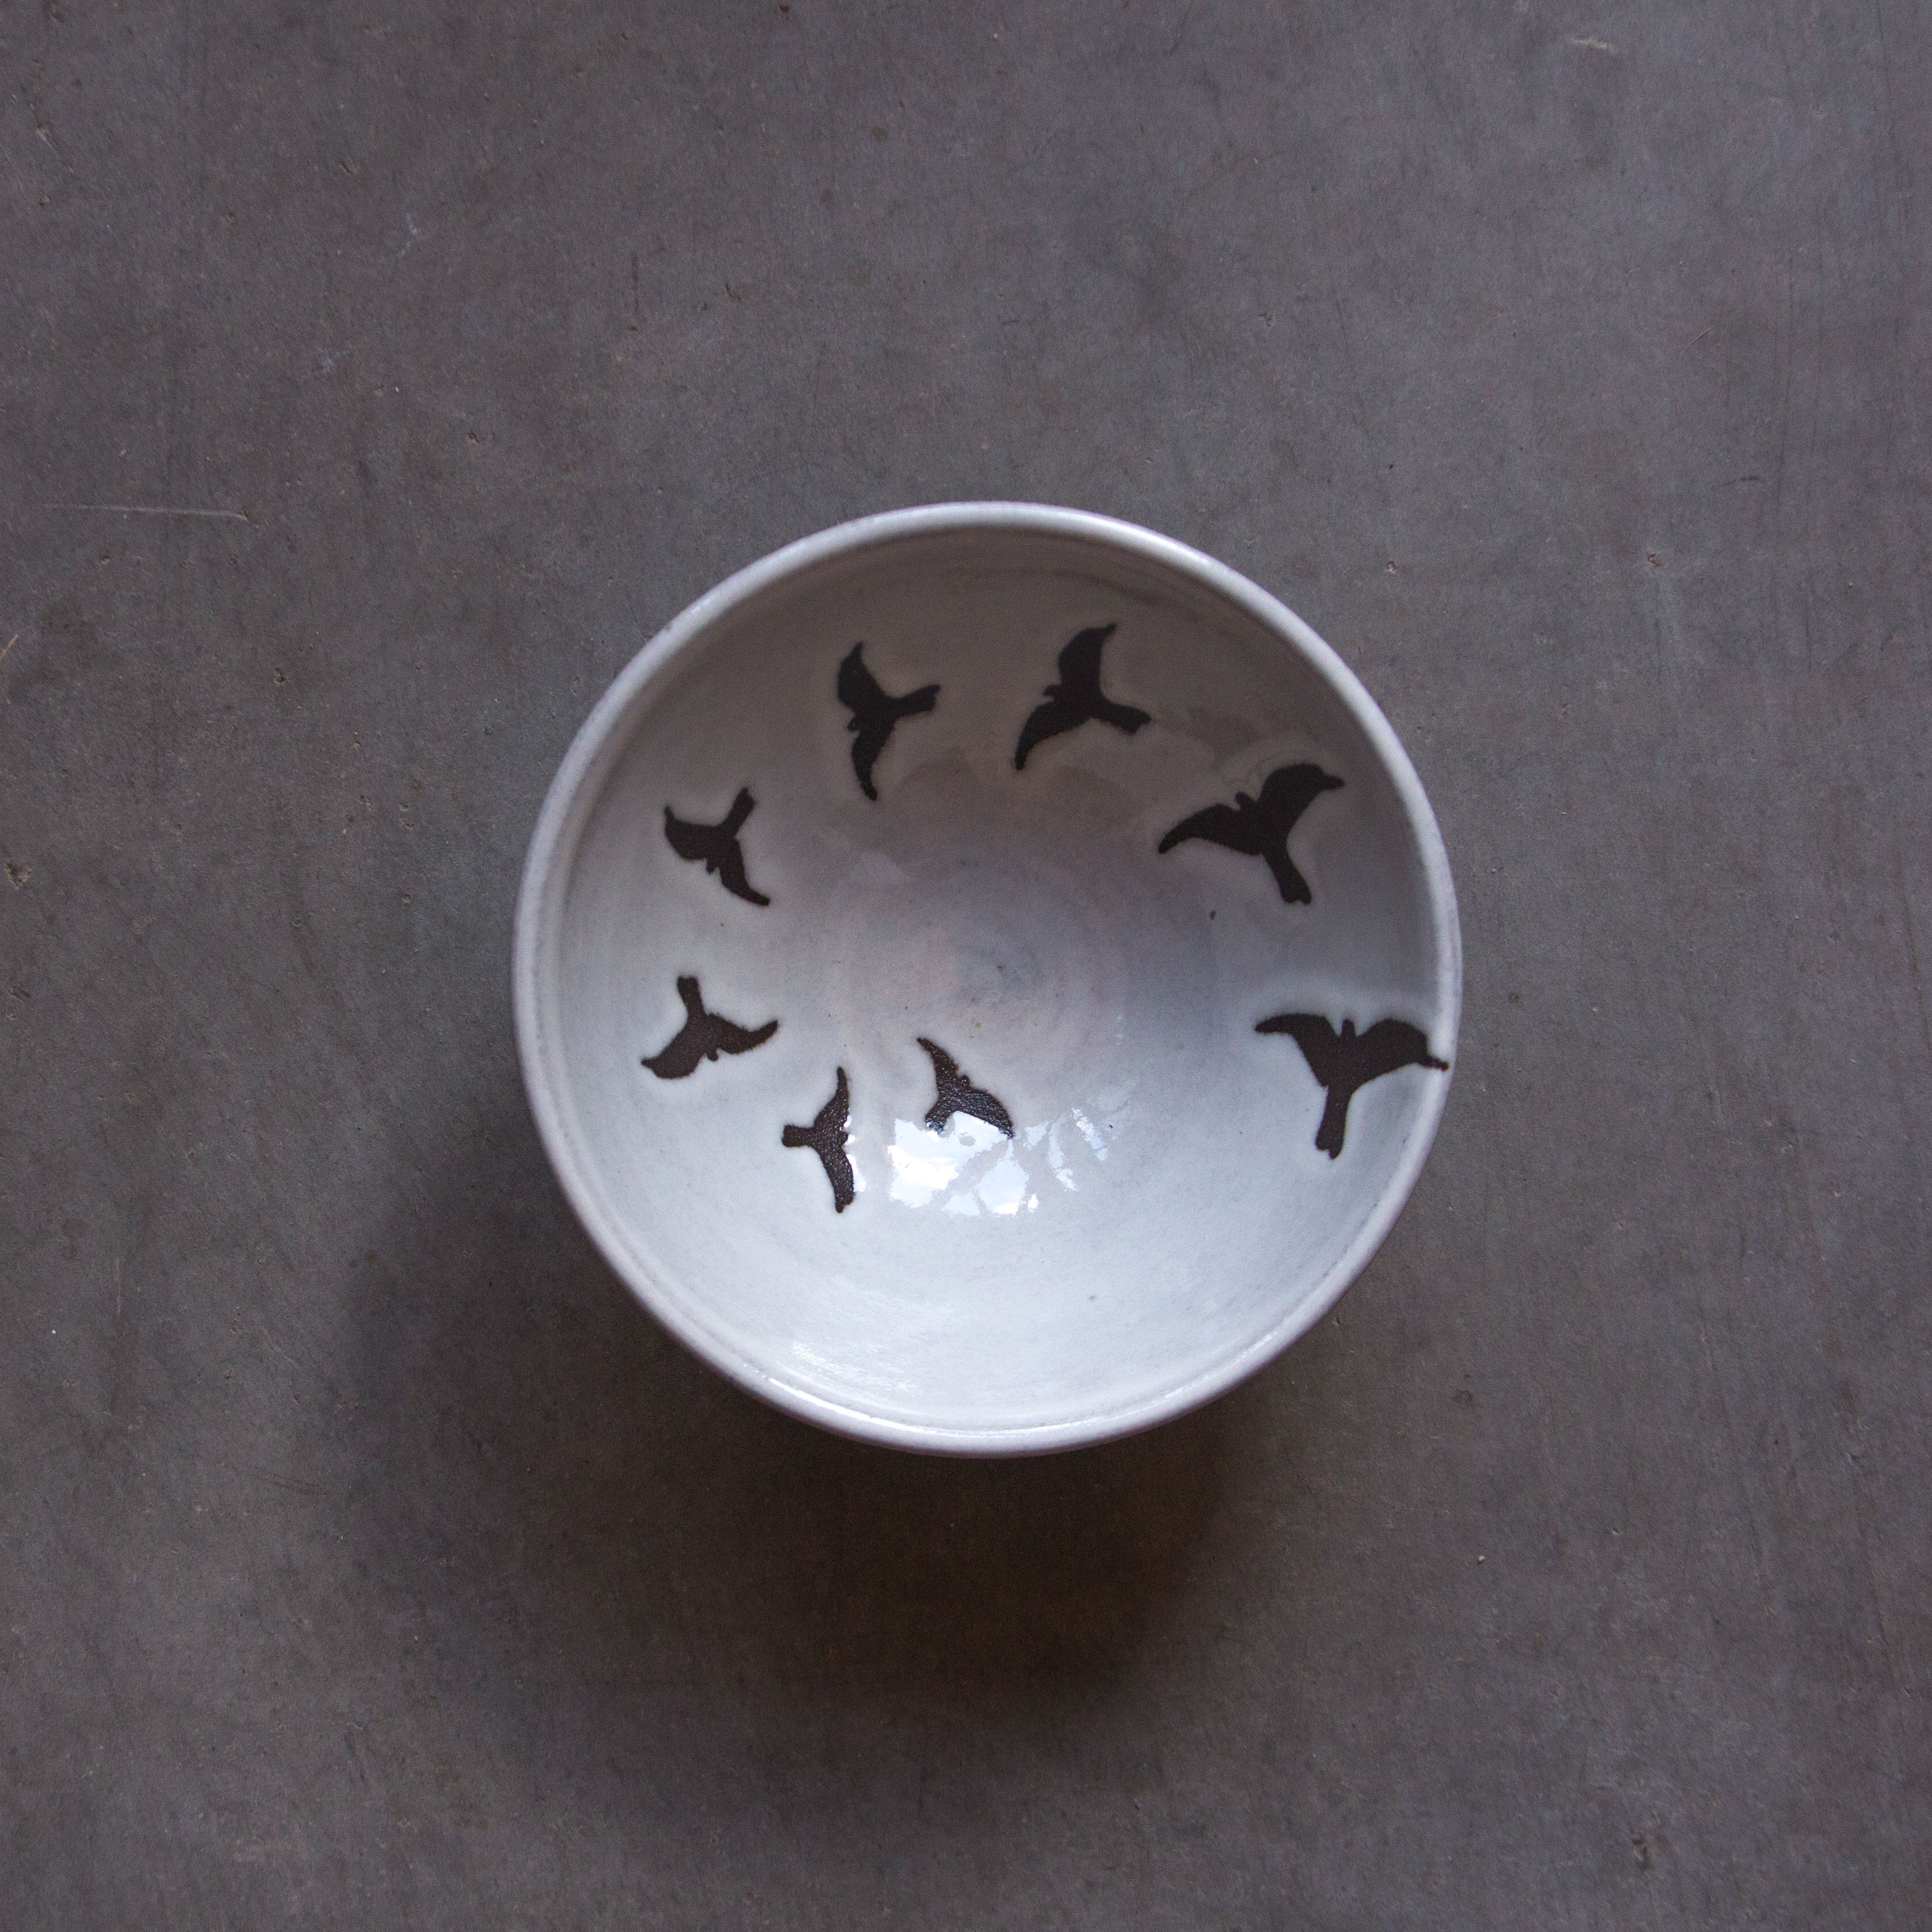 Foxtail Pottery - Tiny Bowl Nighthawk Birds Antique White